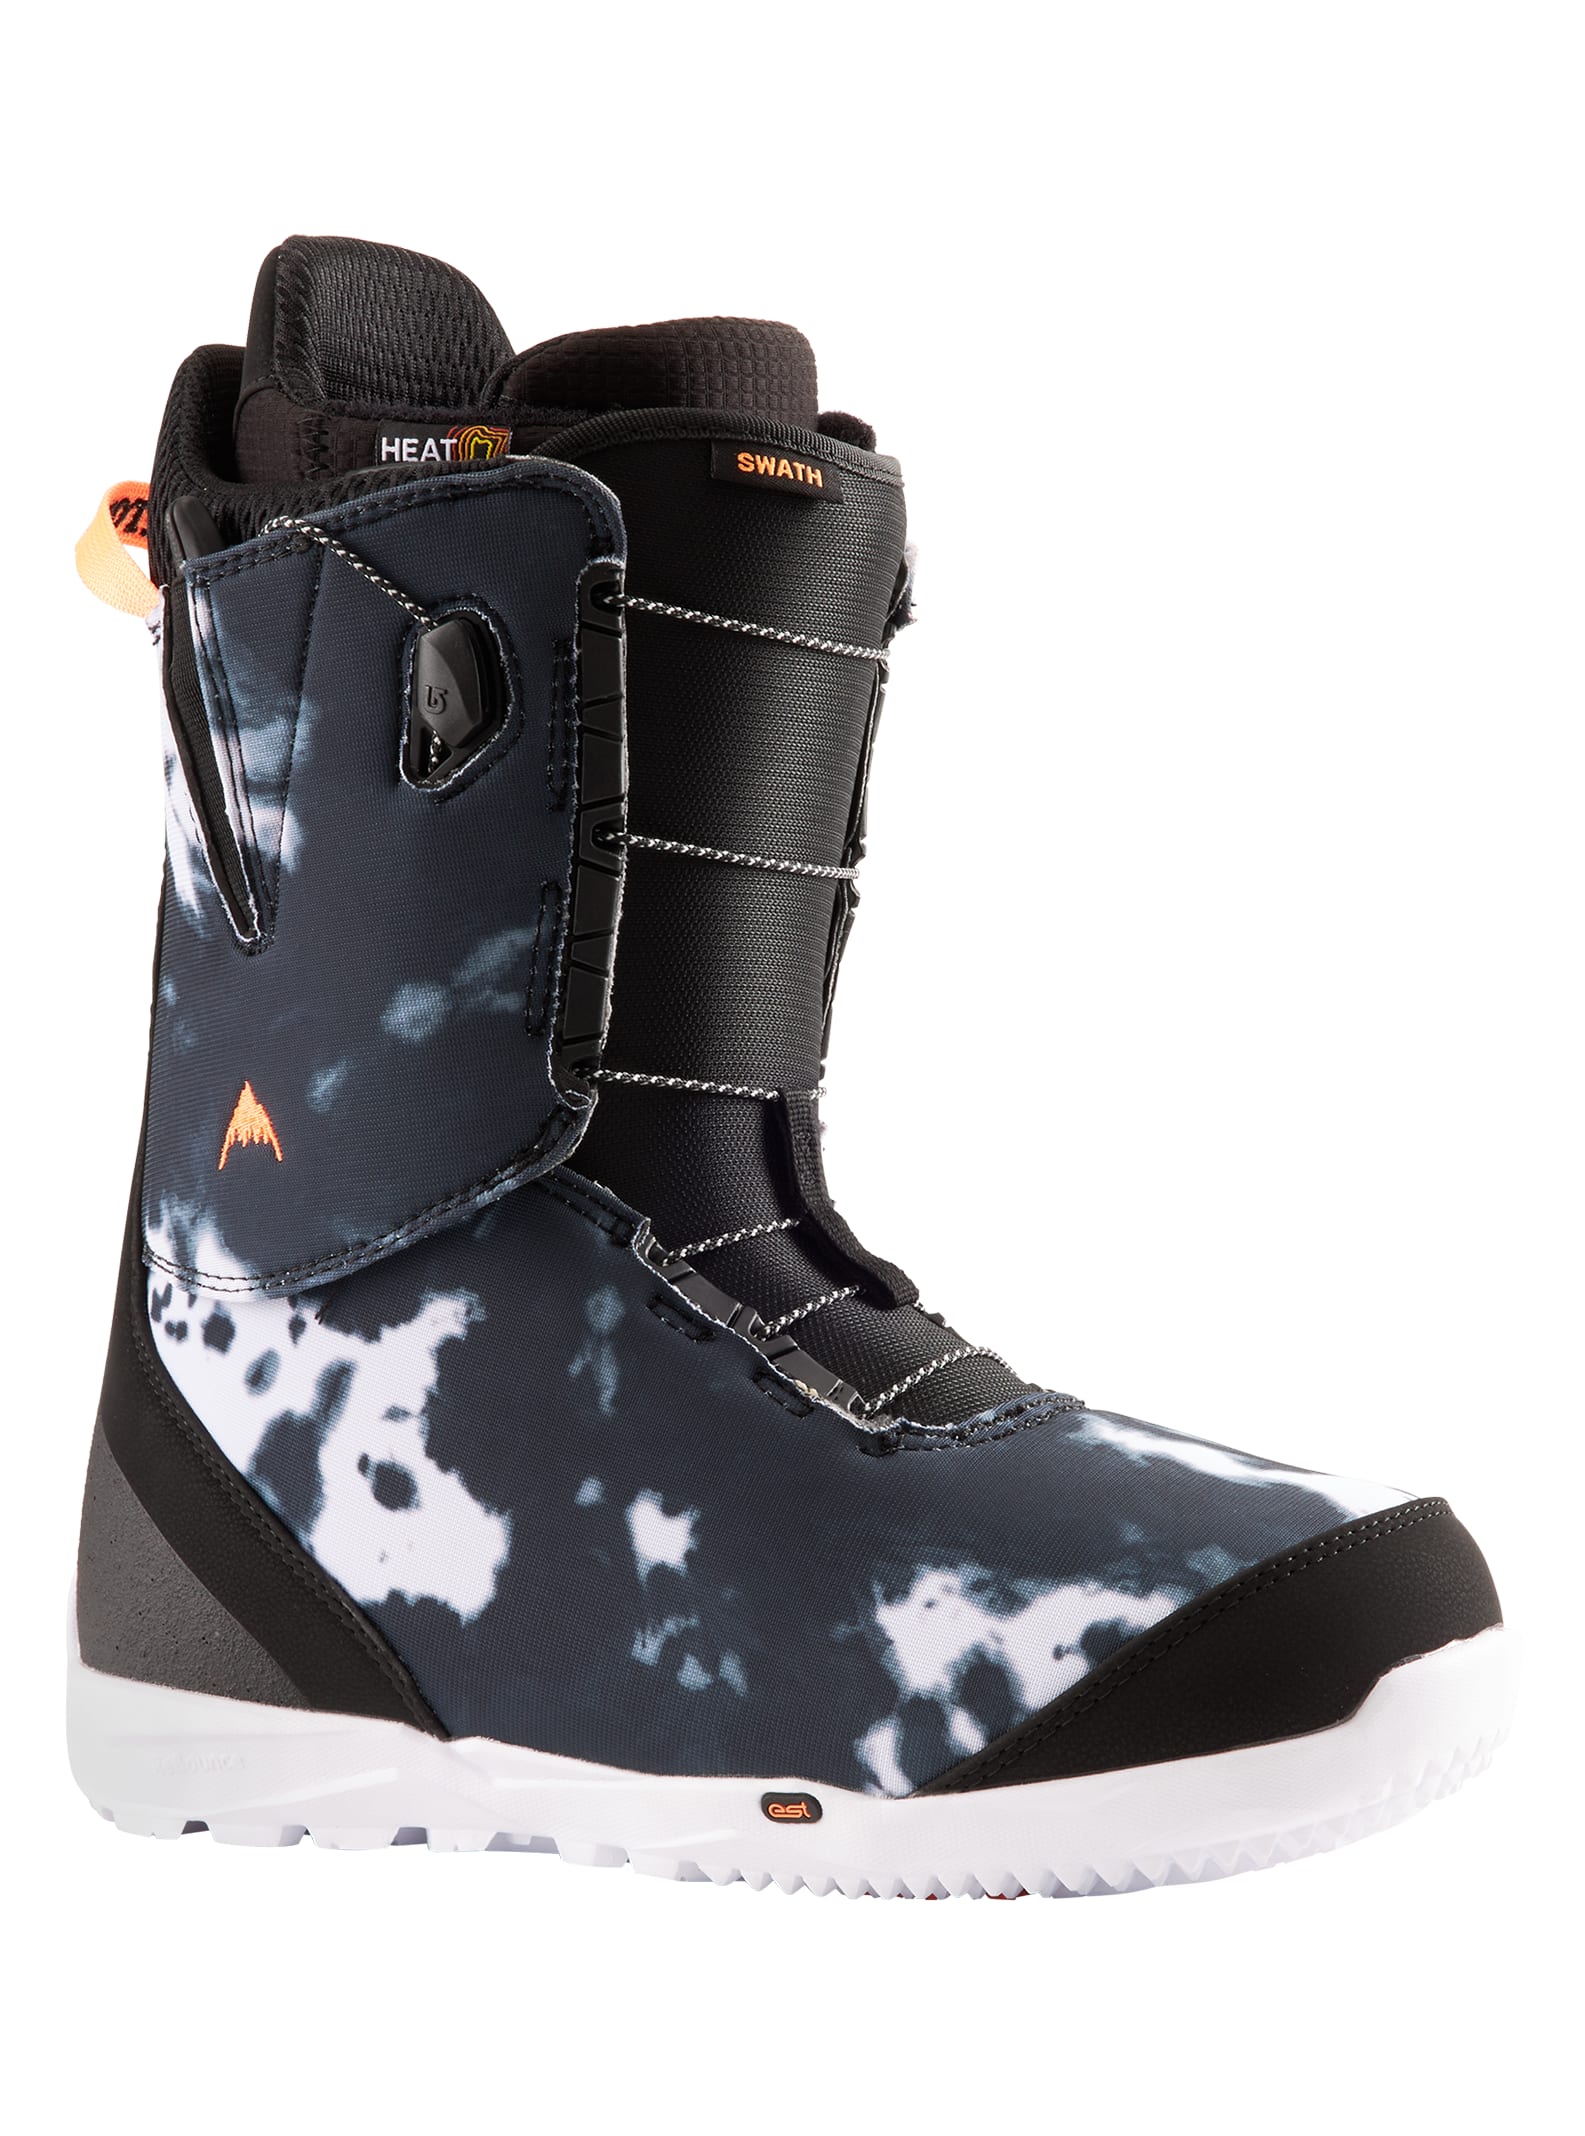 Burton Womens Mint Boa Snowboard Boots 10 Midnite Blue/Multi 